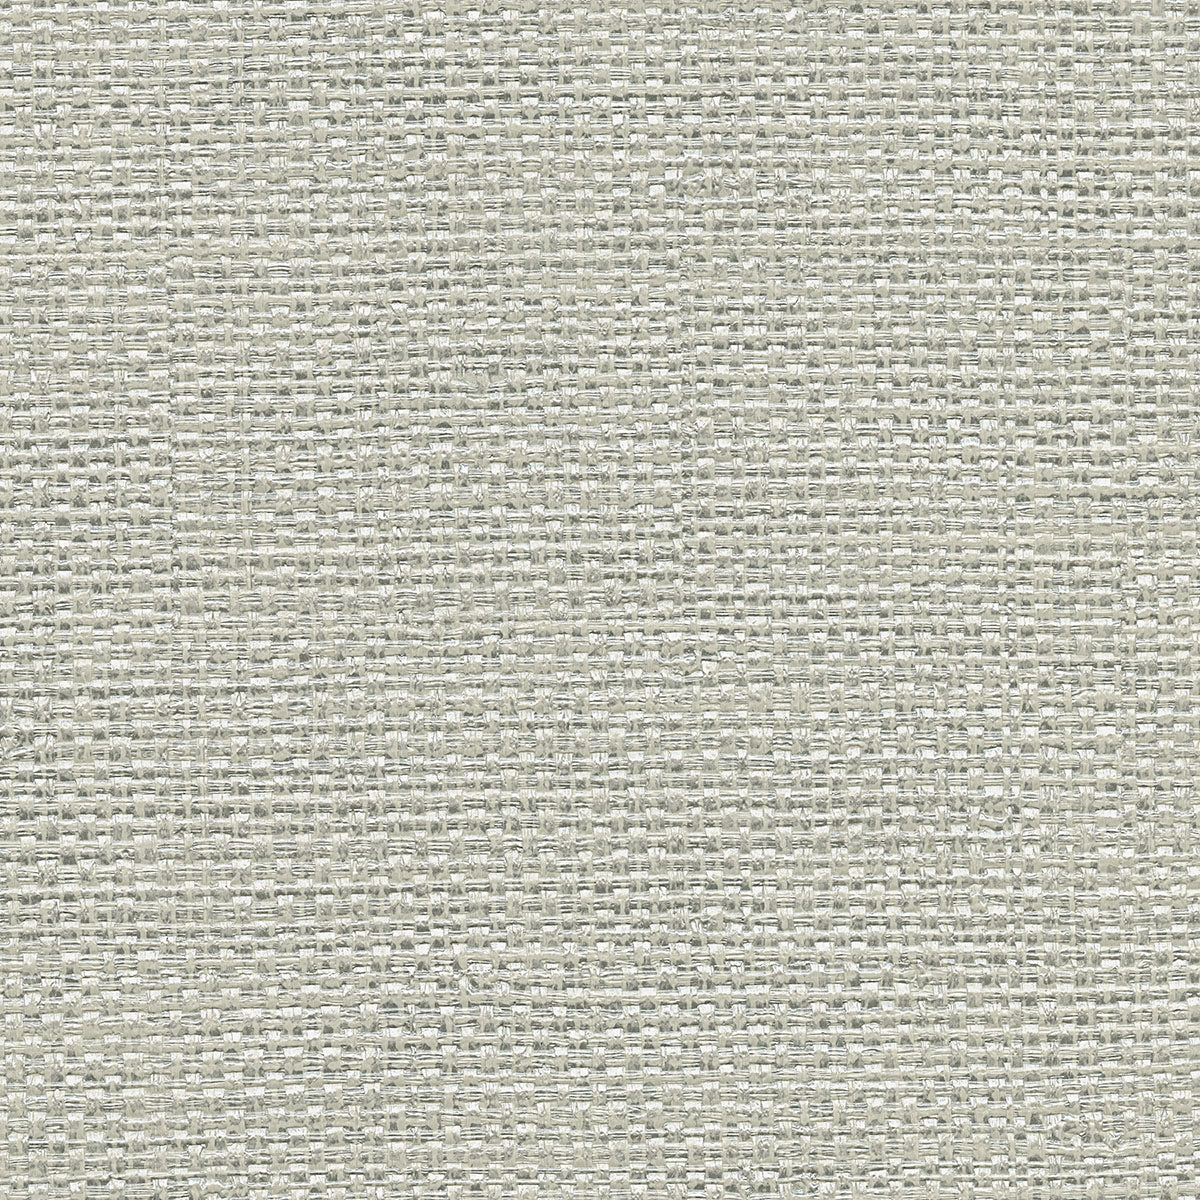 2984-8002 Warner XI Naturals & Grasscloths, Caviar Blue Basketweave Wallpaper Blue - Warner